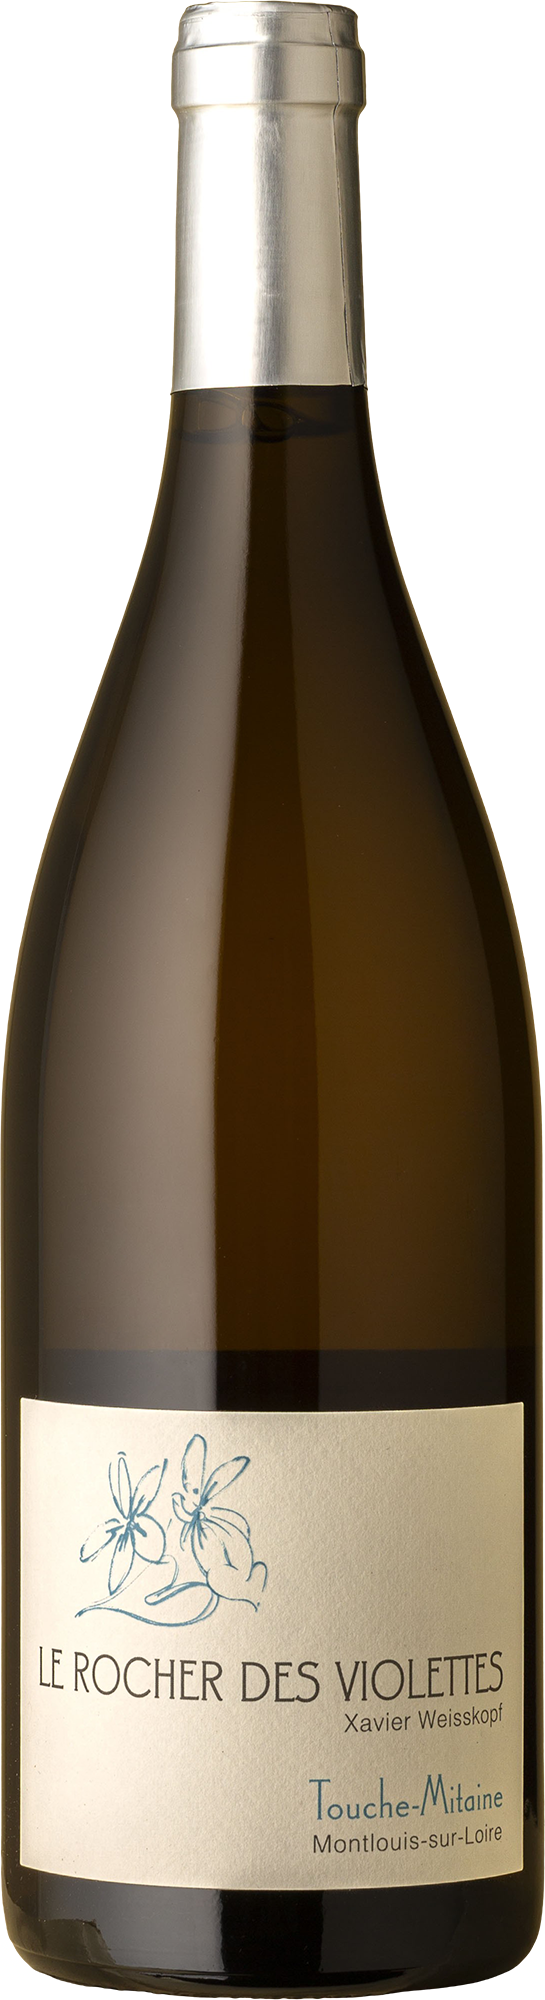 Le Rocher Des Violettes - Touche Mitaine Sec Chenin Blanc 2020 White Wine